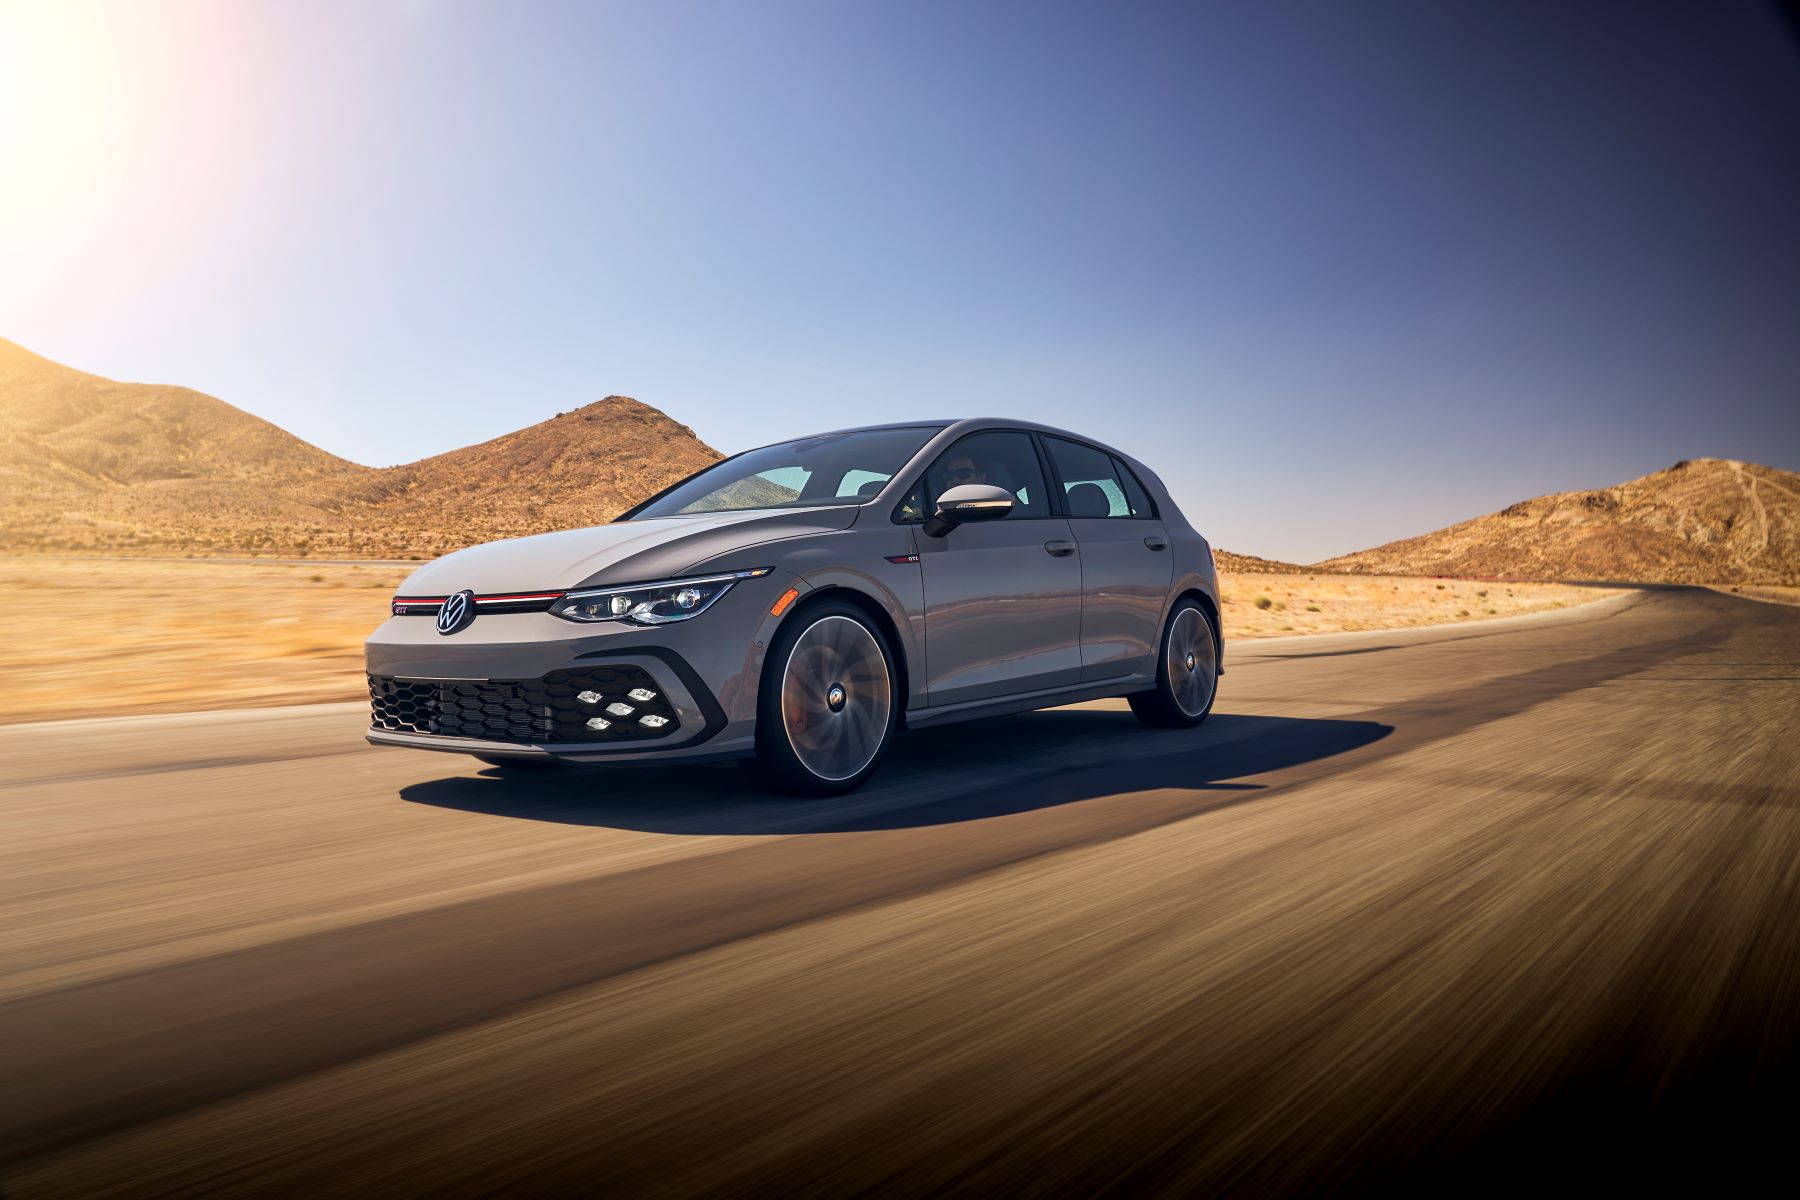 The 2022 Volkswagen Golf GTI hot hatch sporty hatchback model in gray driving through a desert